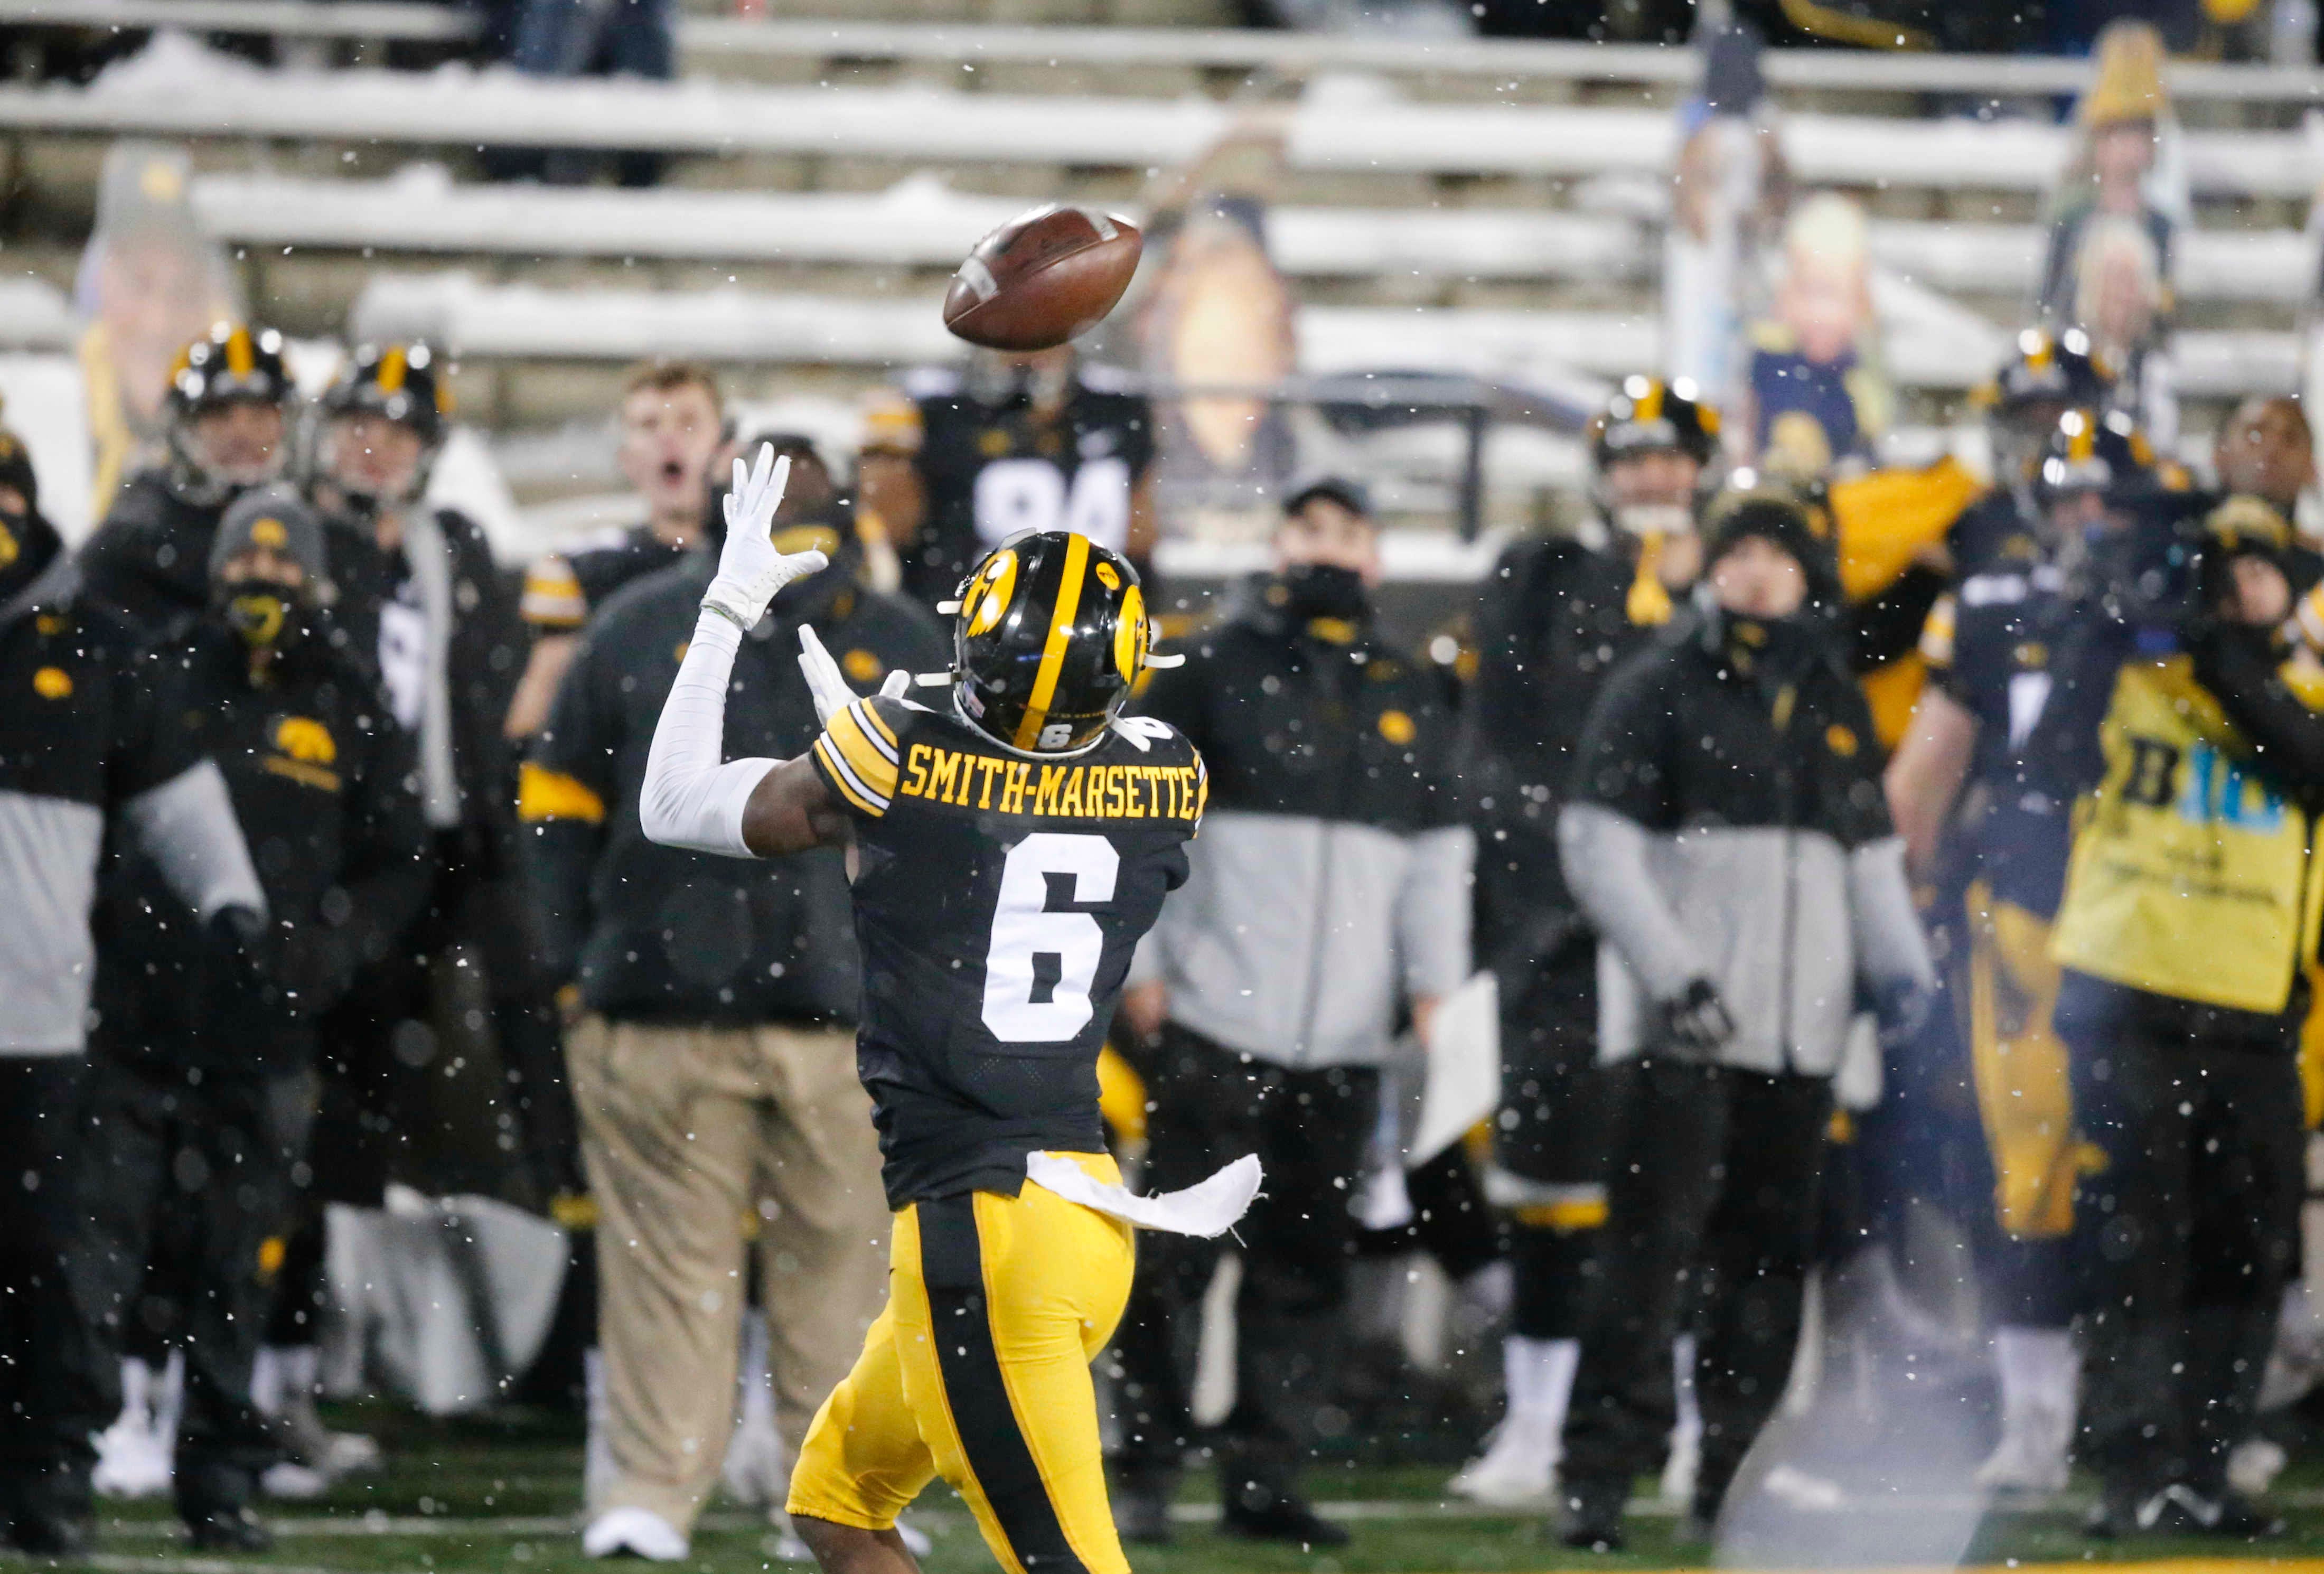 Iowa senior receiver Ihmir Smith-Marsette pulls down a touchdown reception in the third quarter against Wisconsin on Saturday, Dec. 12, 2020, at Kinnick Stadium in Iowa City, Iowa.